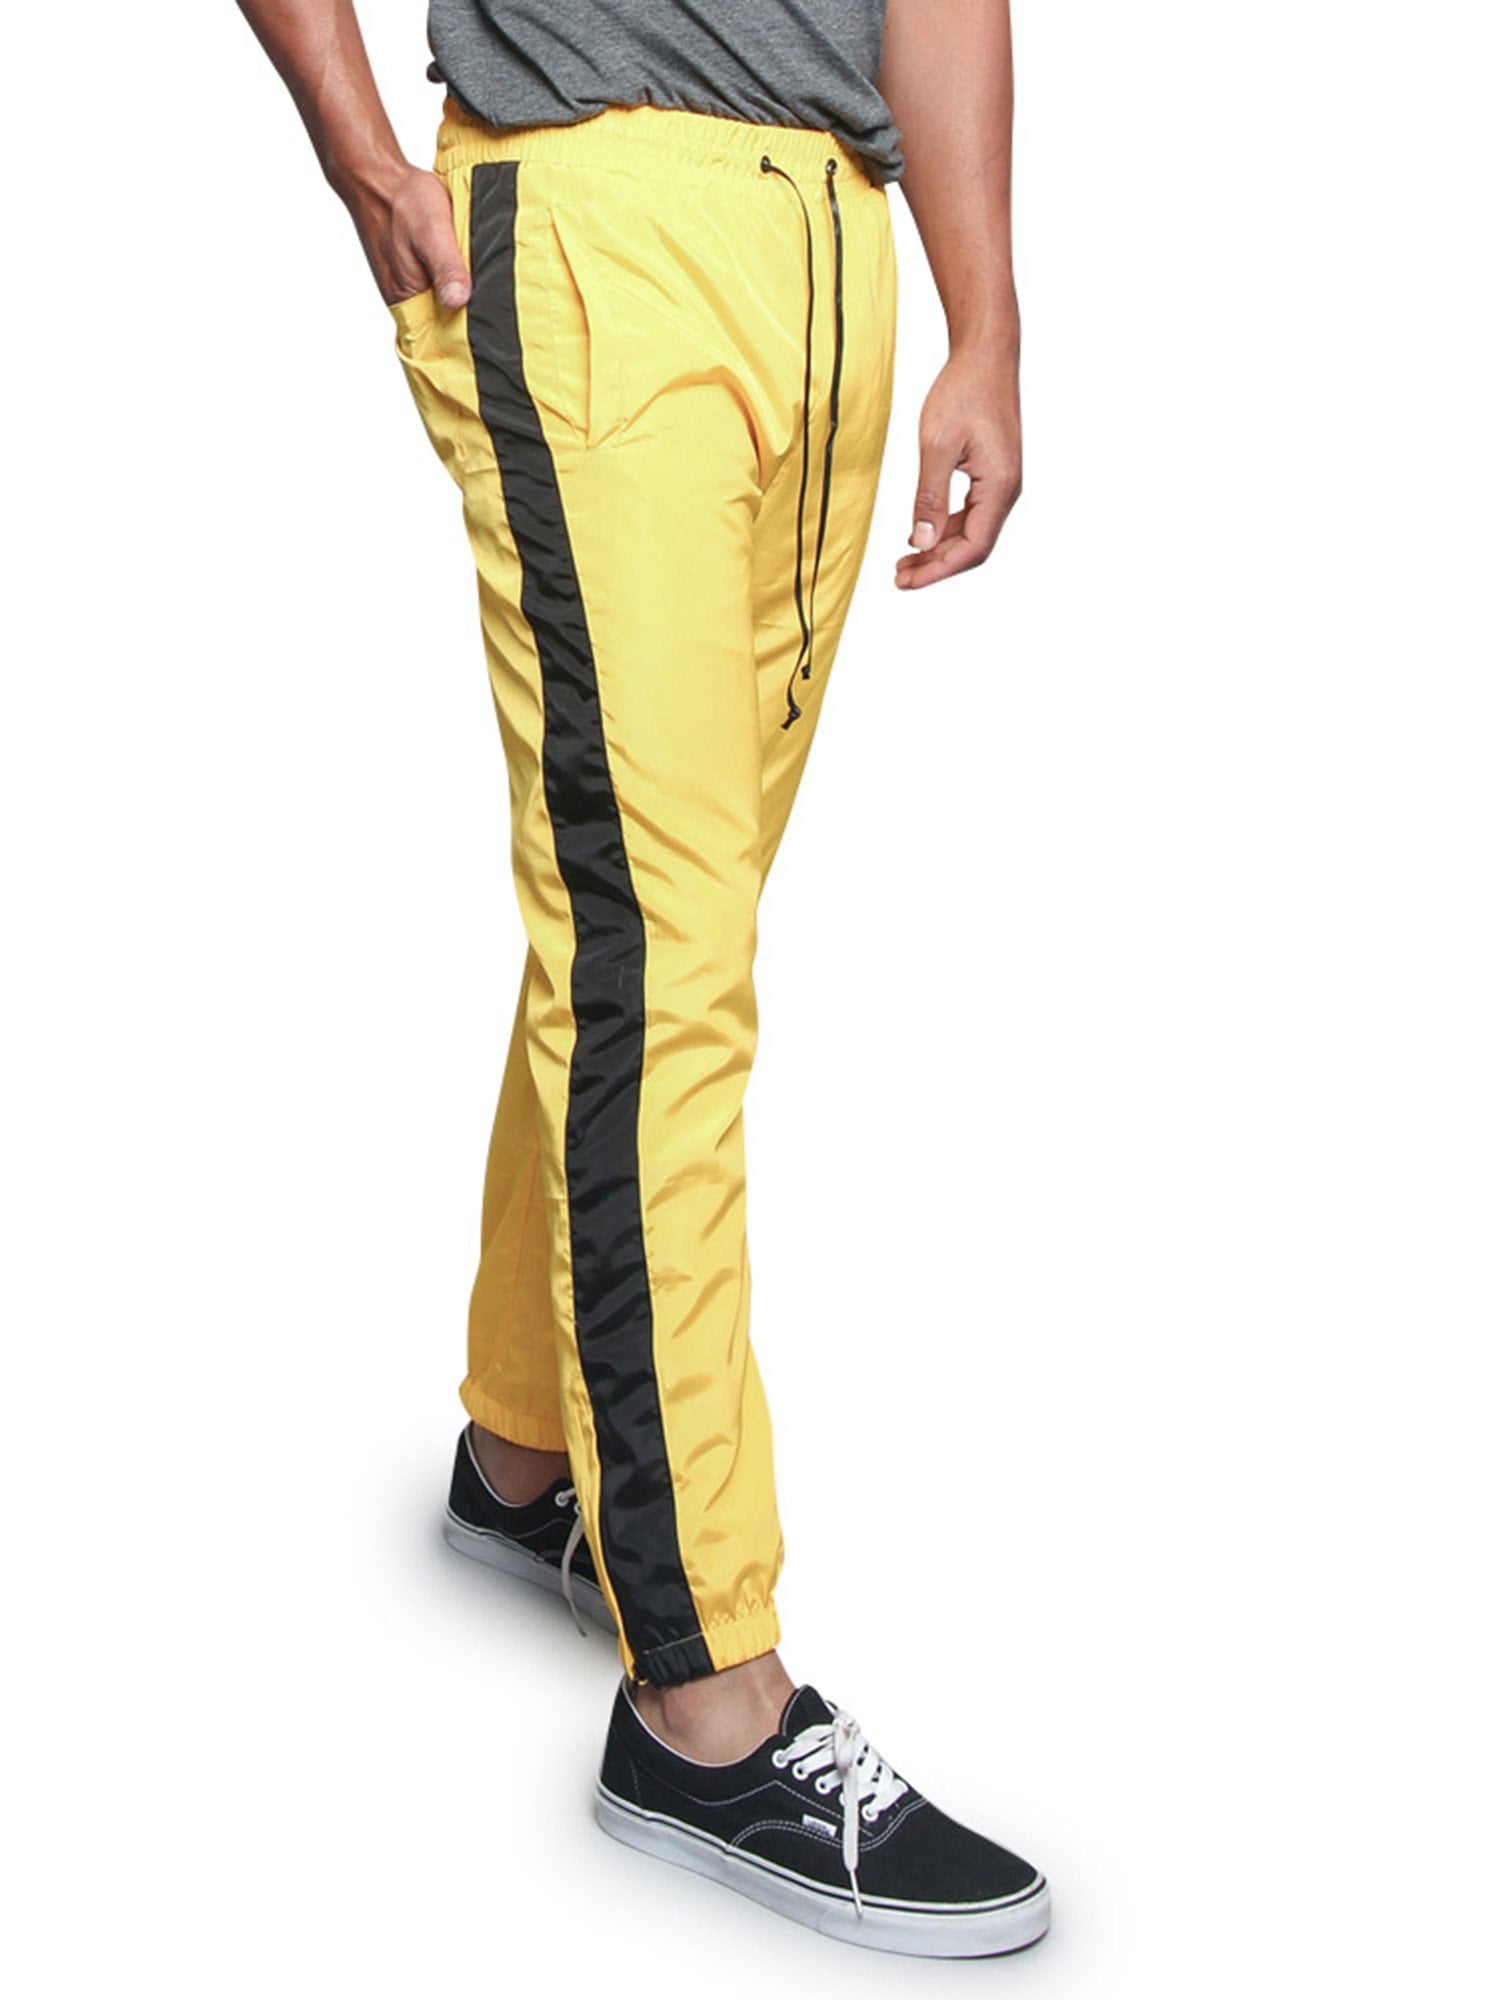 Brand Size 4 Mens Water-repellant Contrast Striped Tracksuit Pants Jomashop.com Men Sport & Swimwear Sportswear Sports Pants Medium 